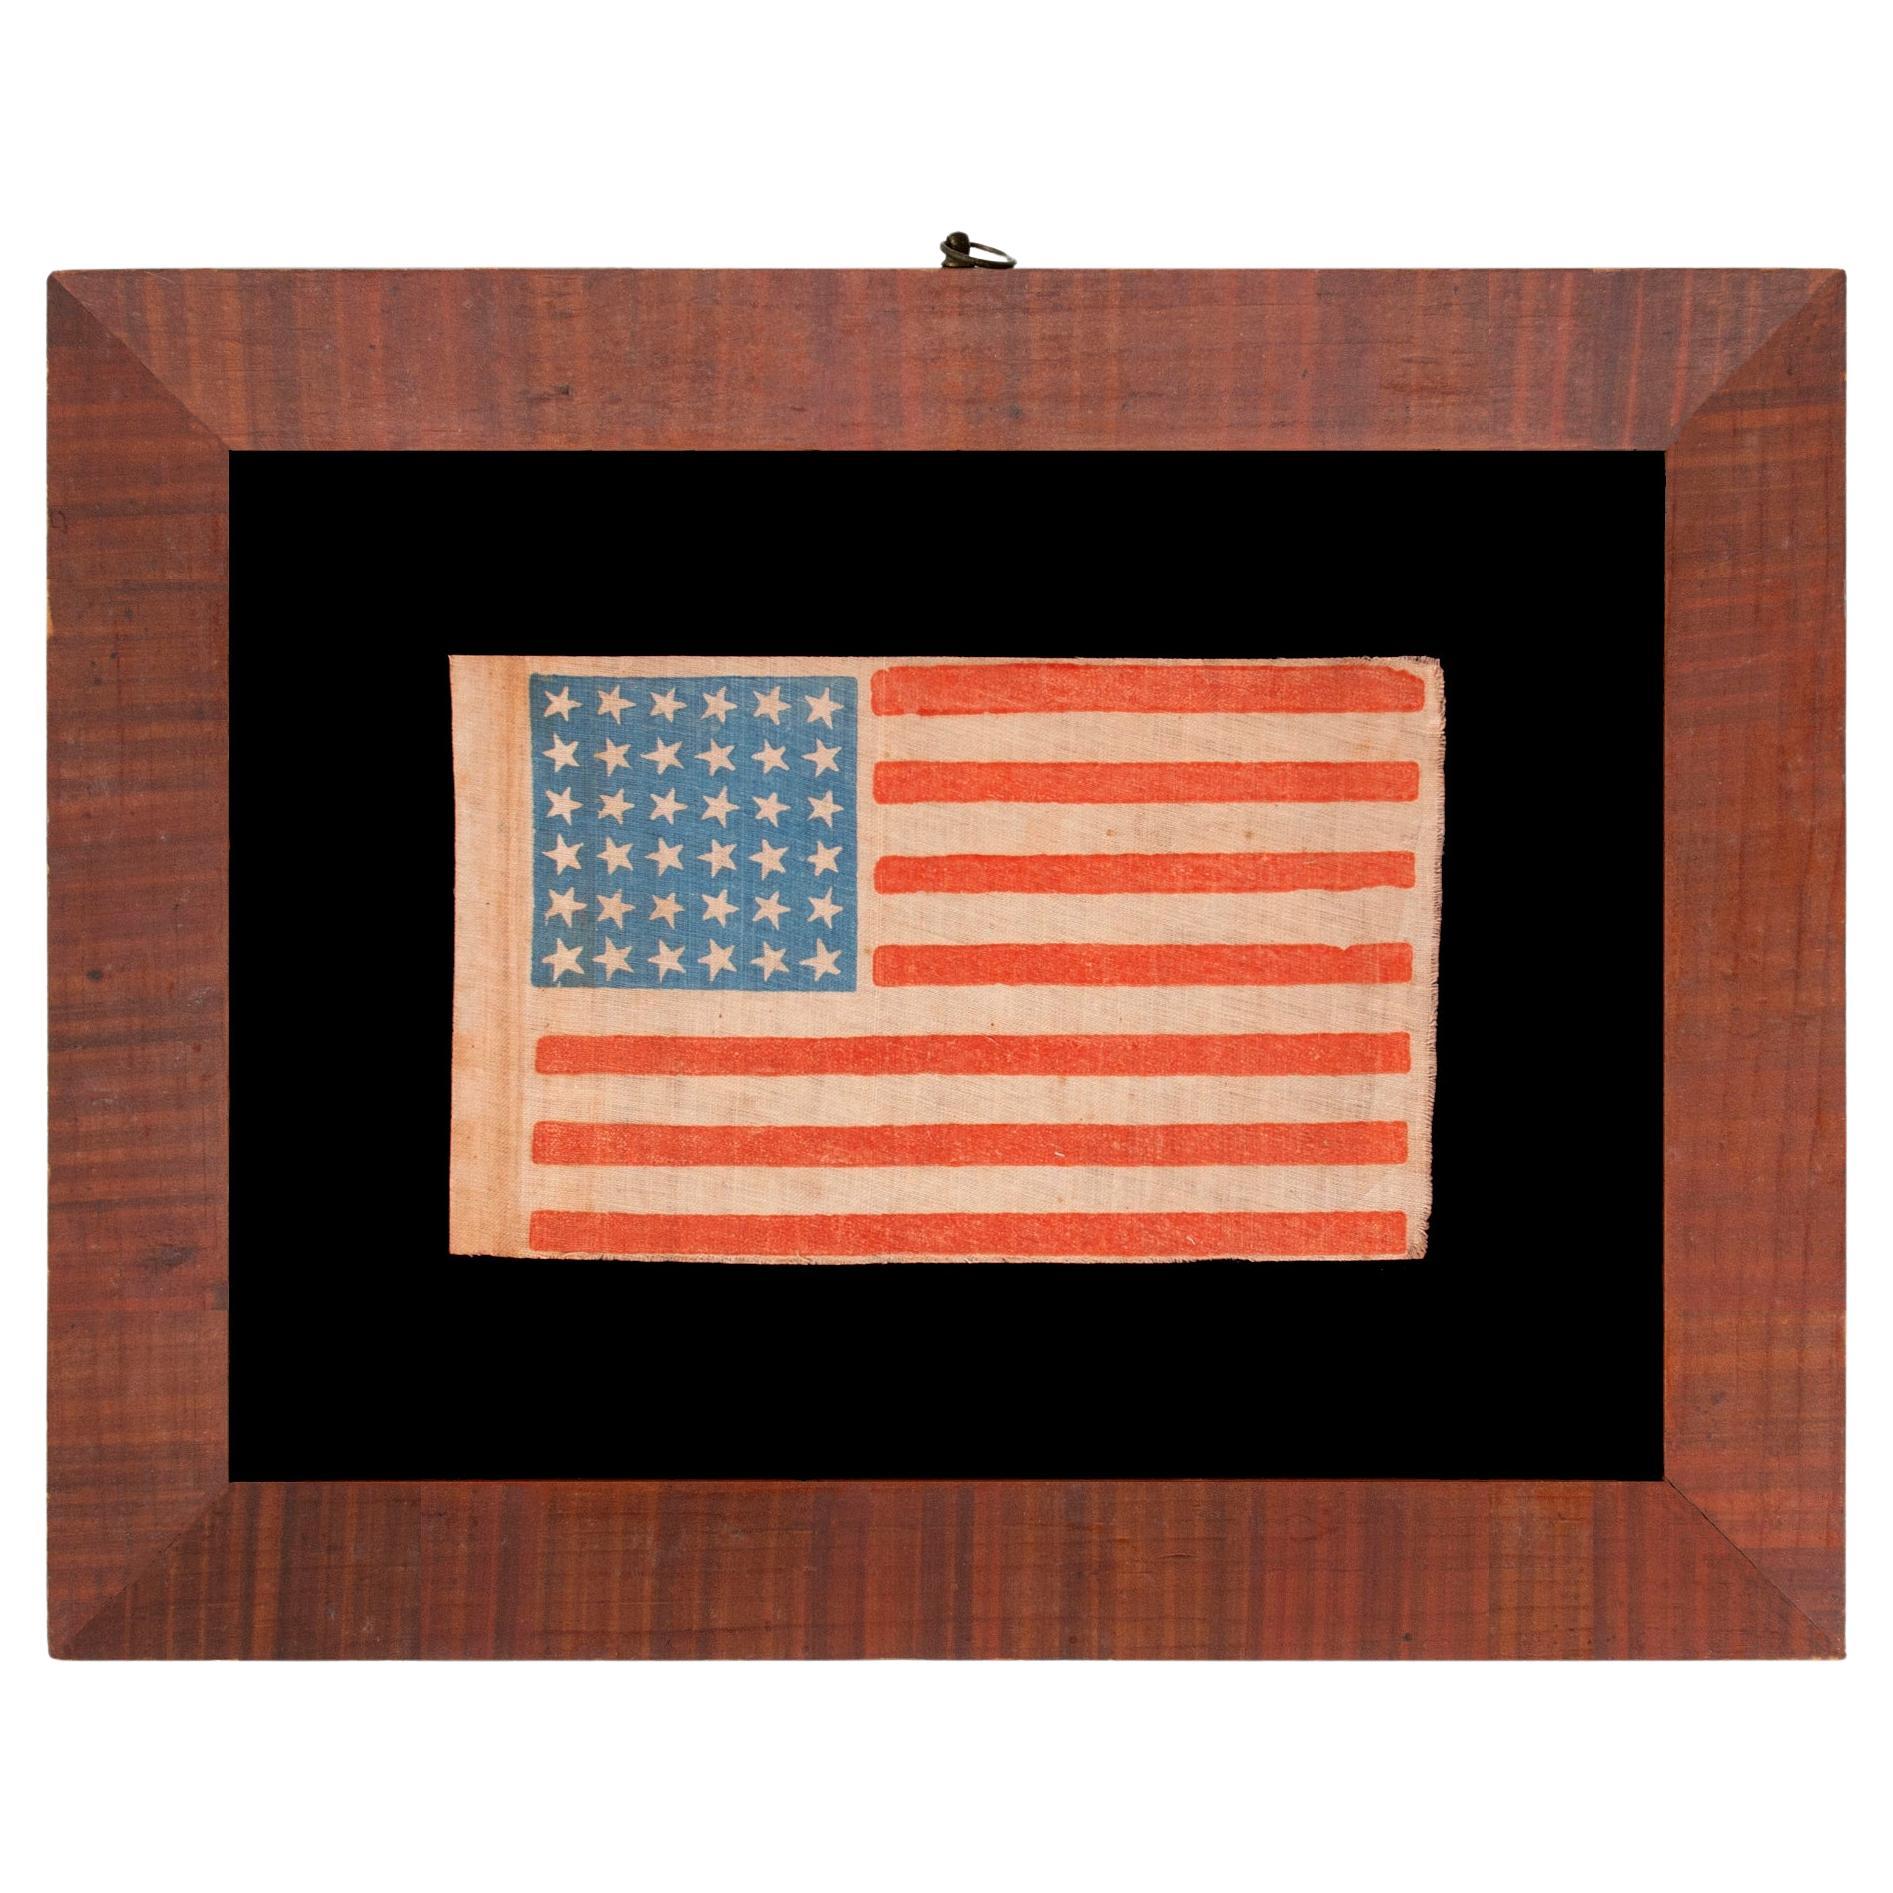 36-Sterne-Antike amerikanische Paradeflagge, Nevada Statehood, ca. 1864-1867